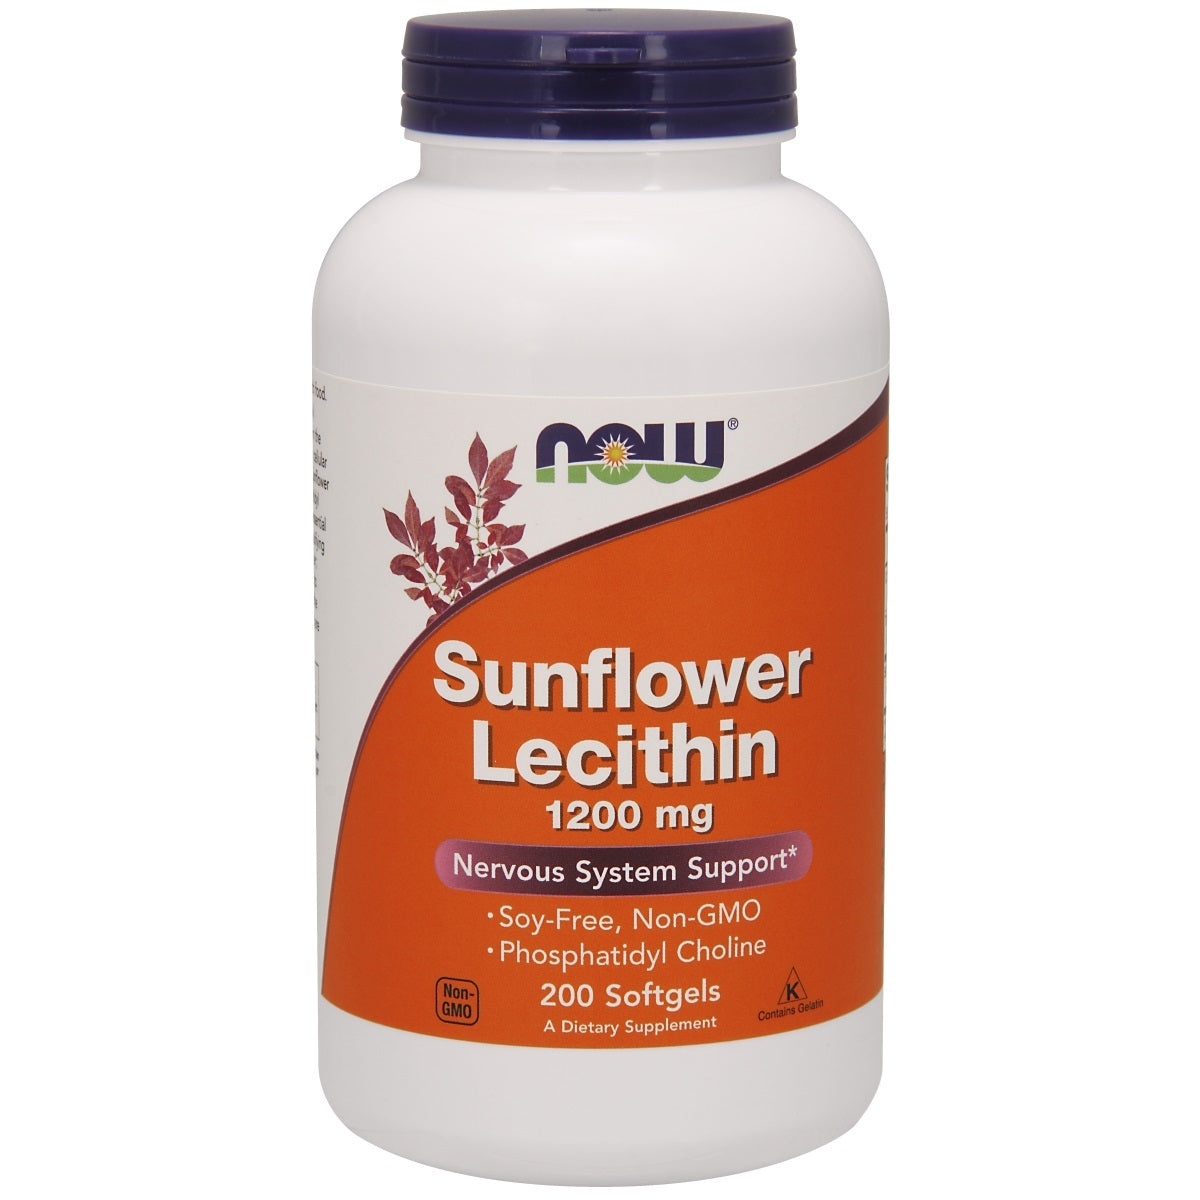 Primary image of Sunflower Lecithin